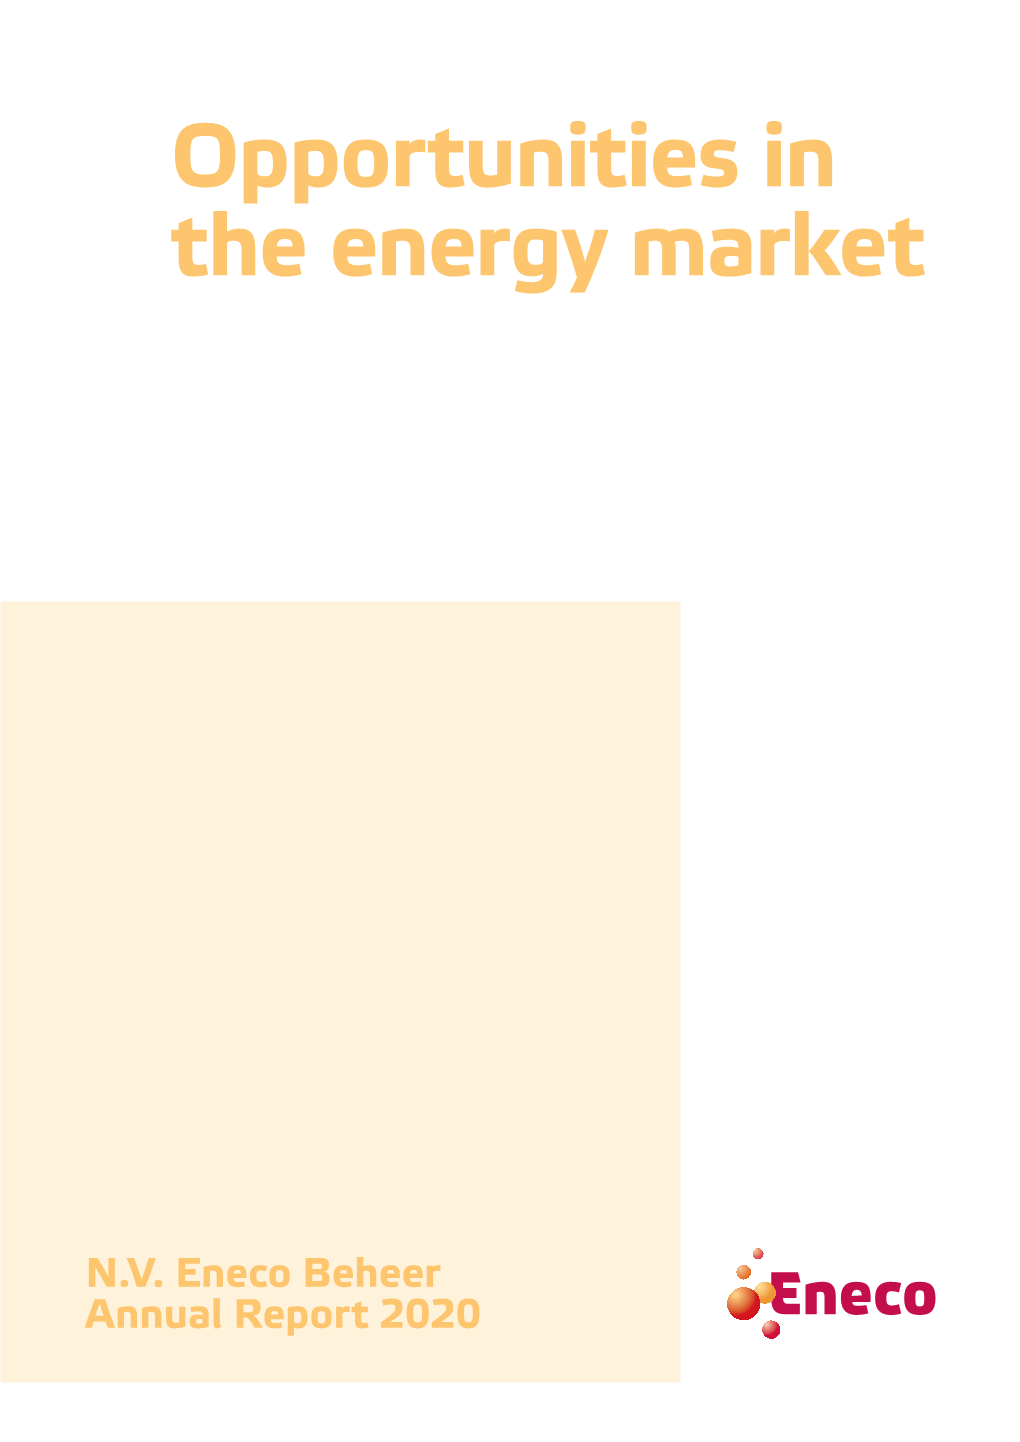 NV Eneco Beheer Annual Report 2020